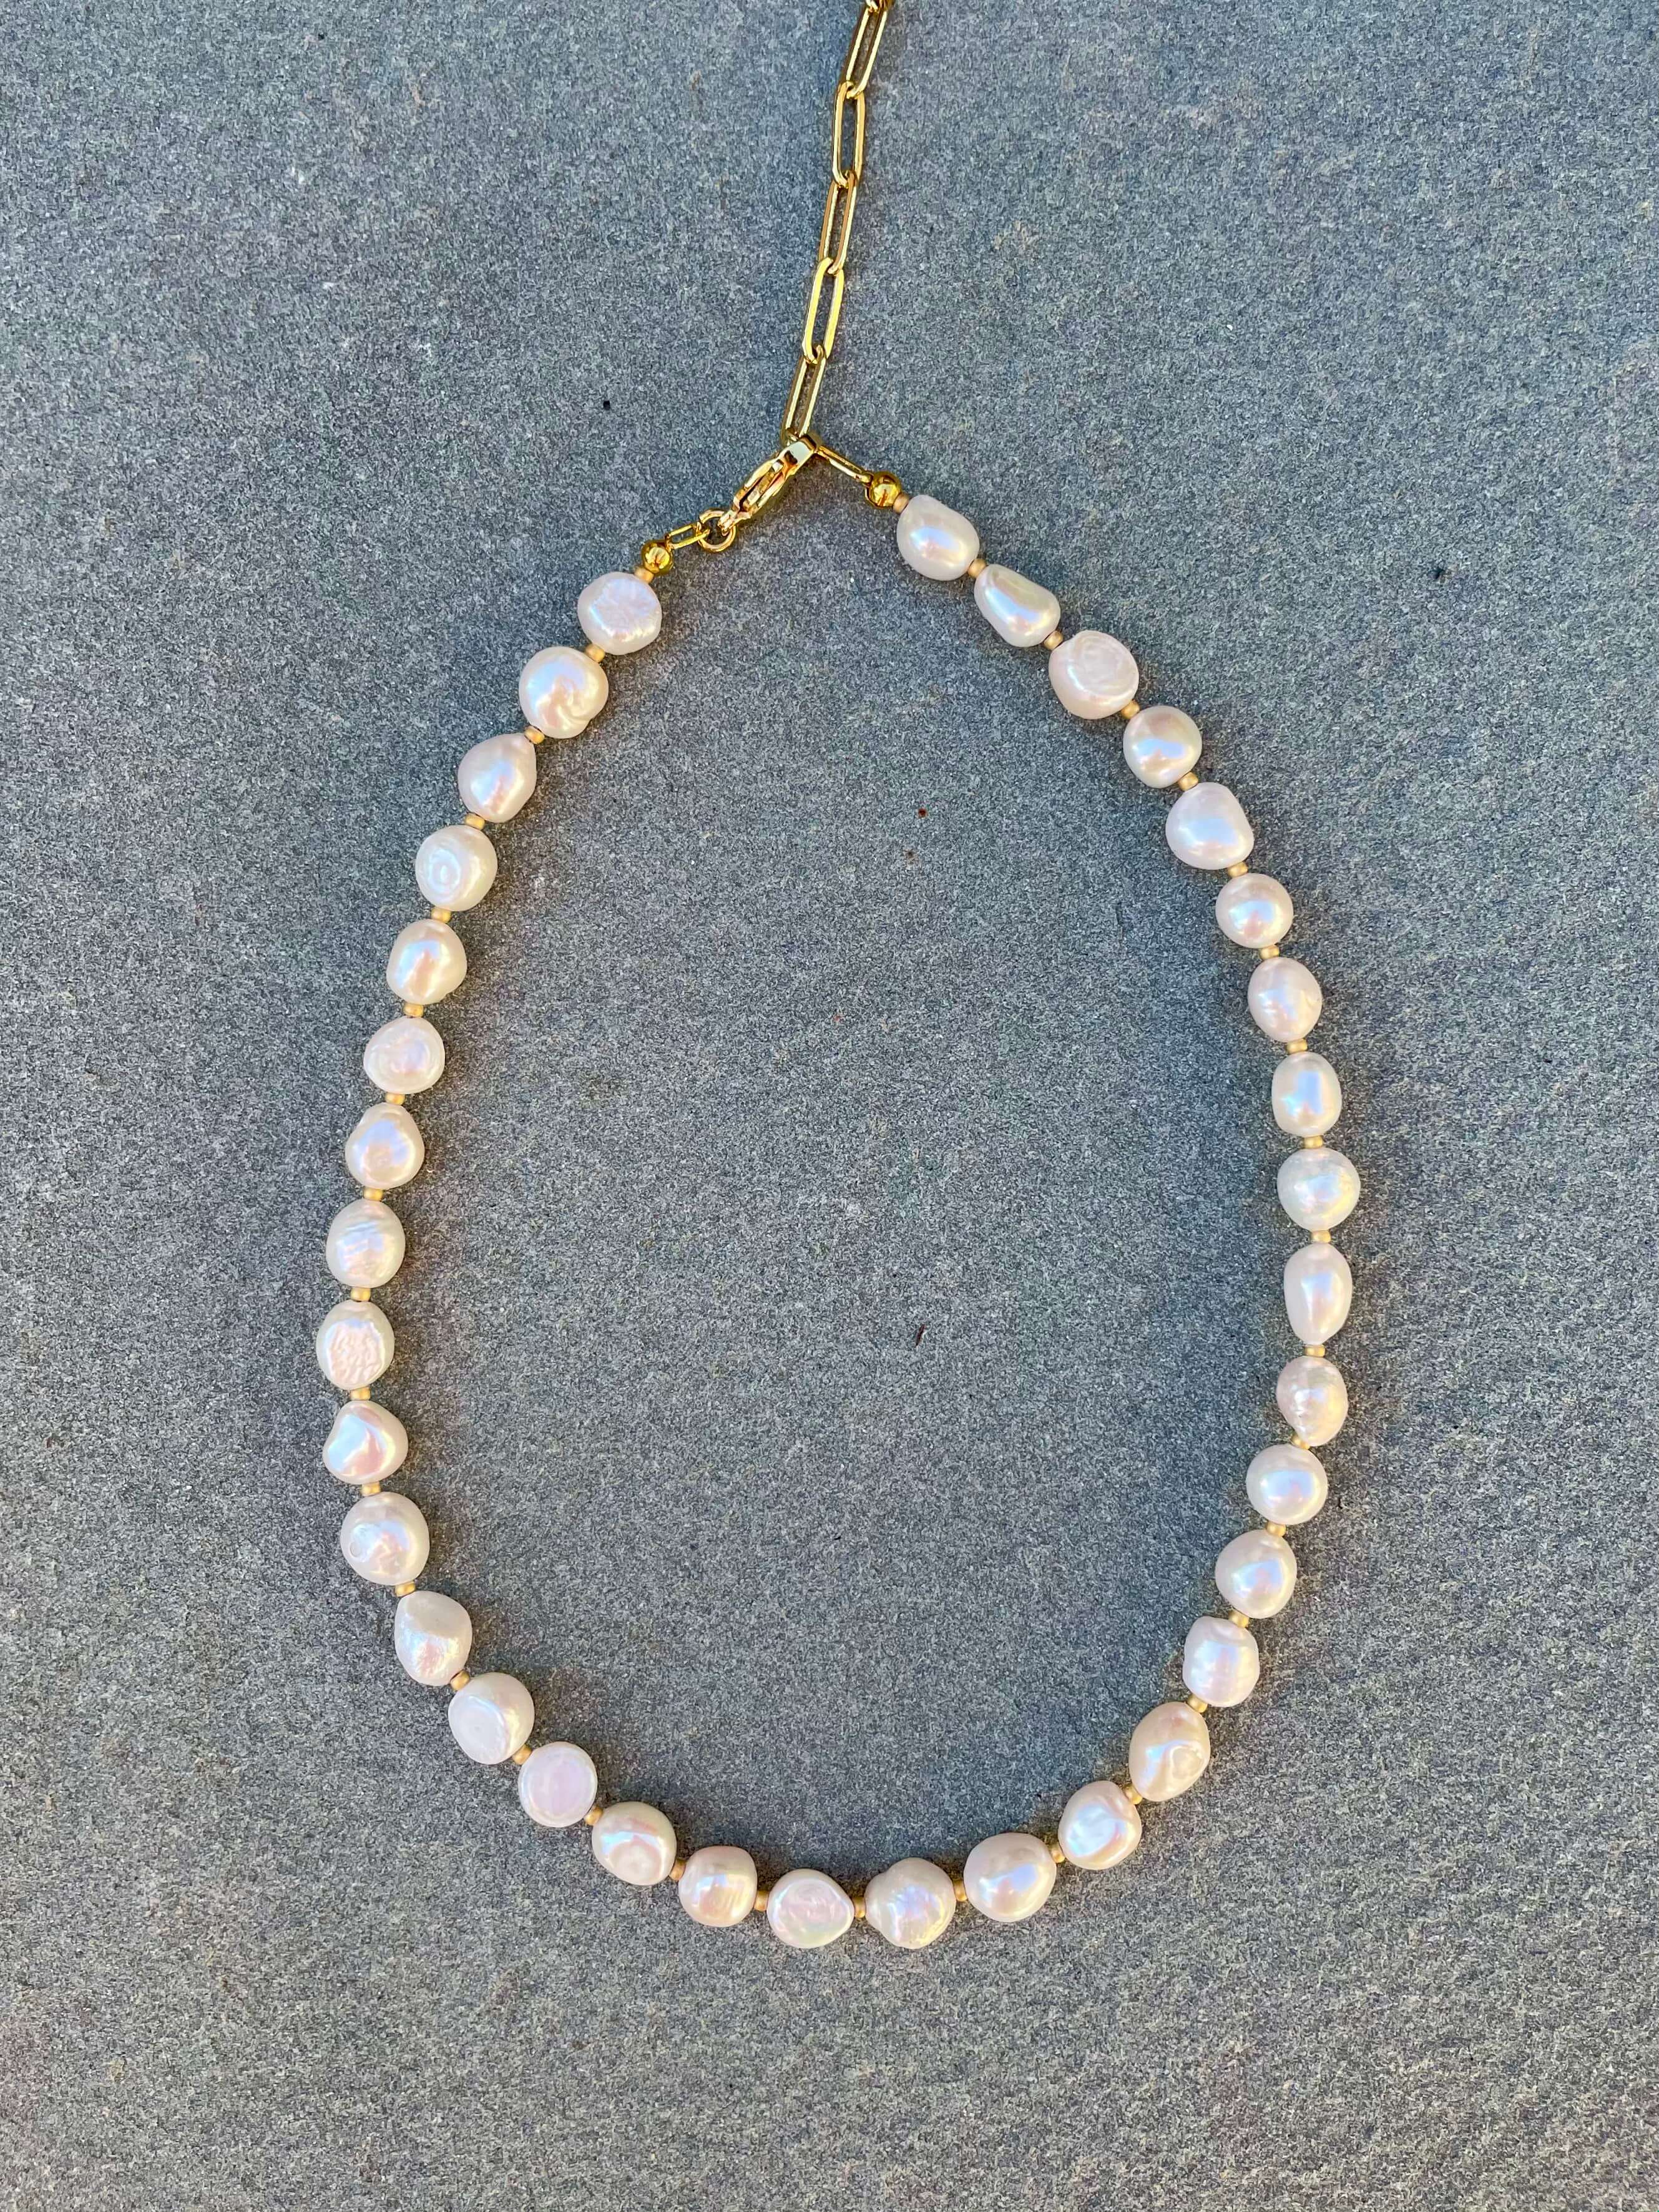 Pearl Necklaces | Parris Jewelers | Hattiesburg, MS